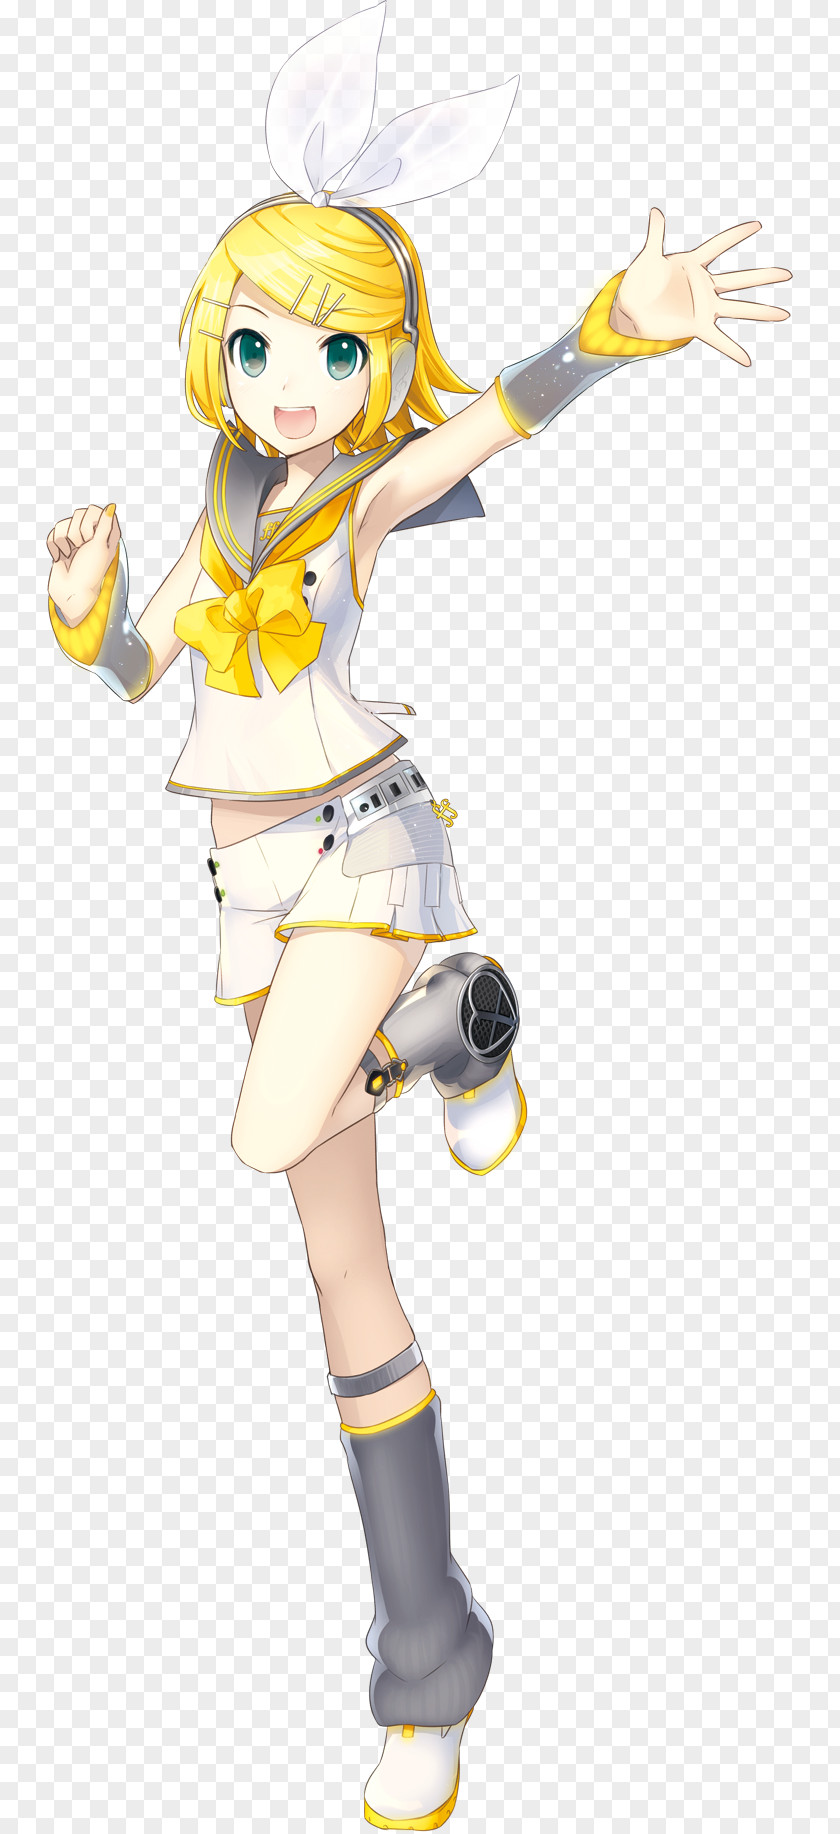 Tohoku Zunko Kagamine Rin/Len Vocaloid 4 Meiko Kaito PNG